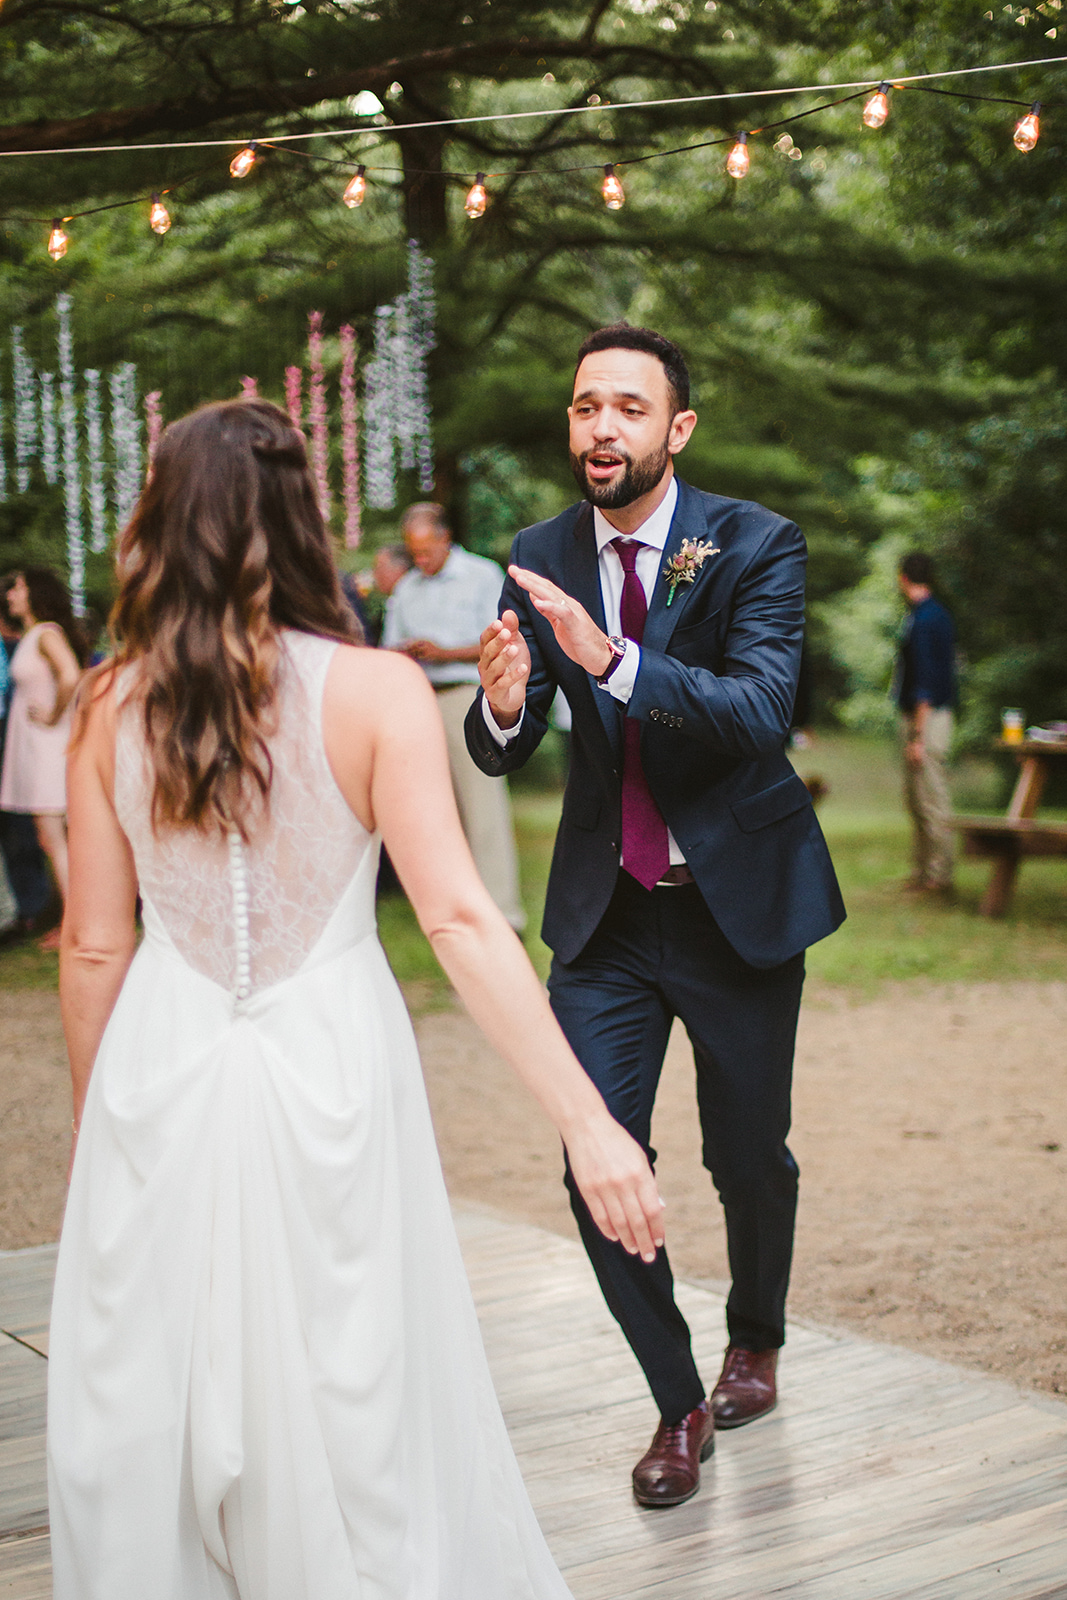 Dan & Elizabeth dancing during their Long Lake Outdoor Center Wedding